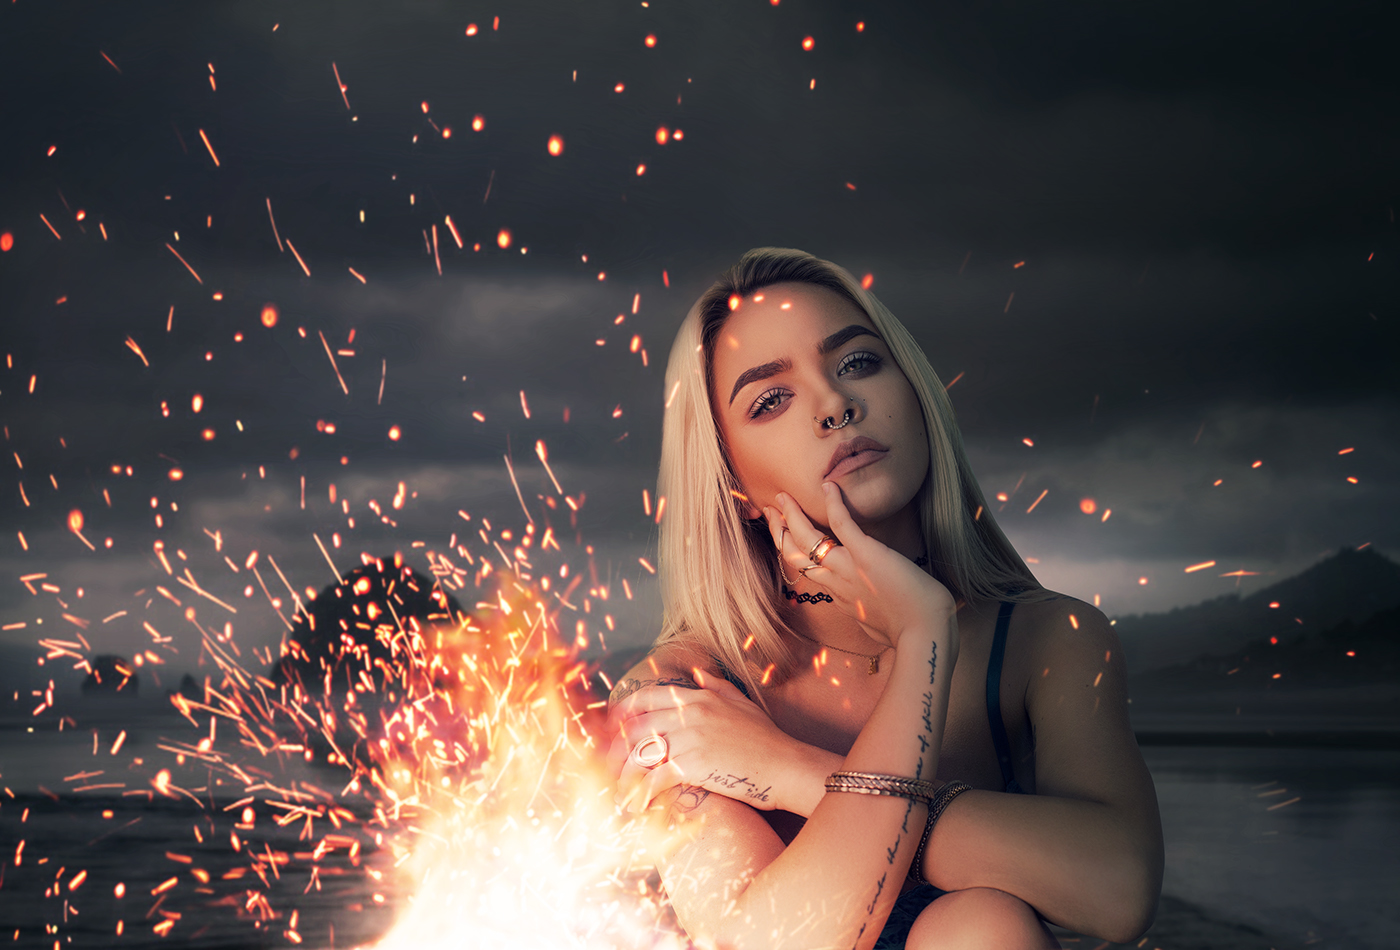 manipulation Editing  photoshop retouching  Digital Art  Photography  fire flame models